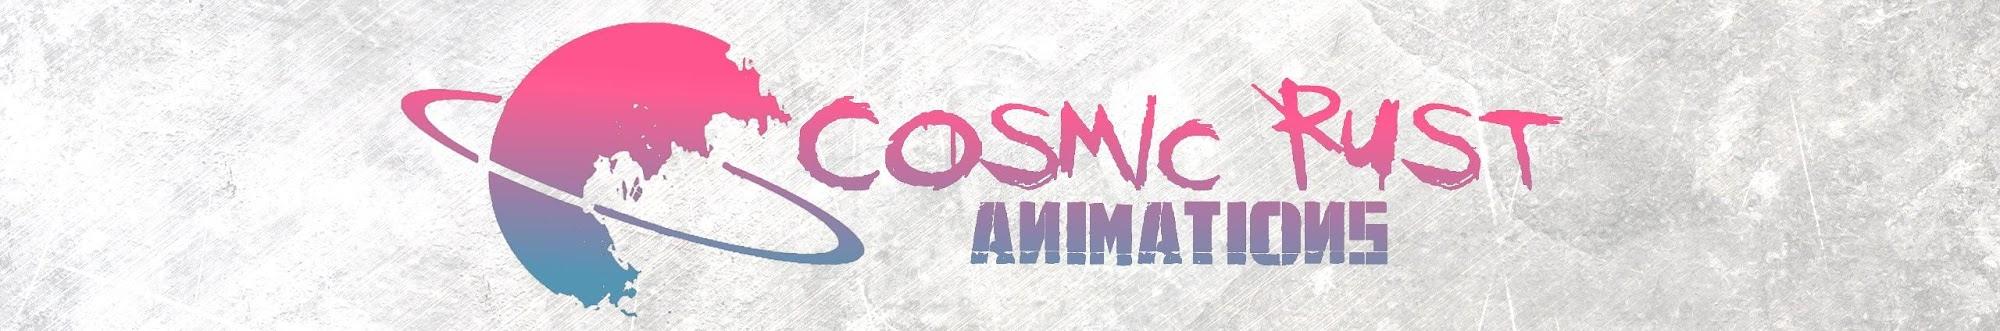 Cosmic Rust Animations 